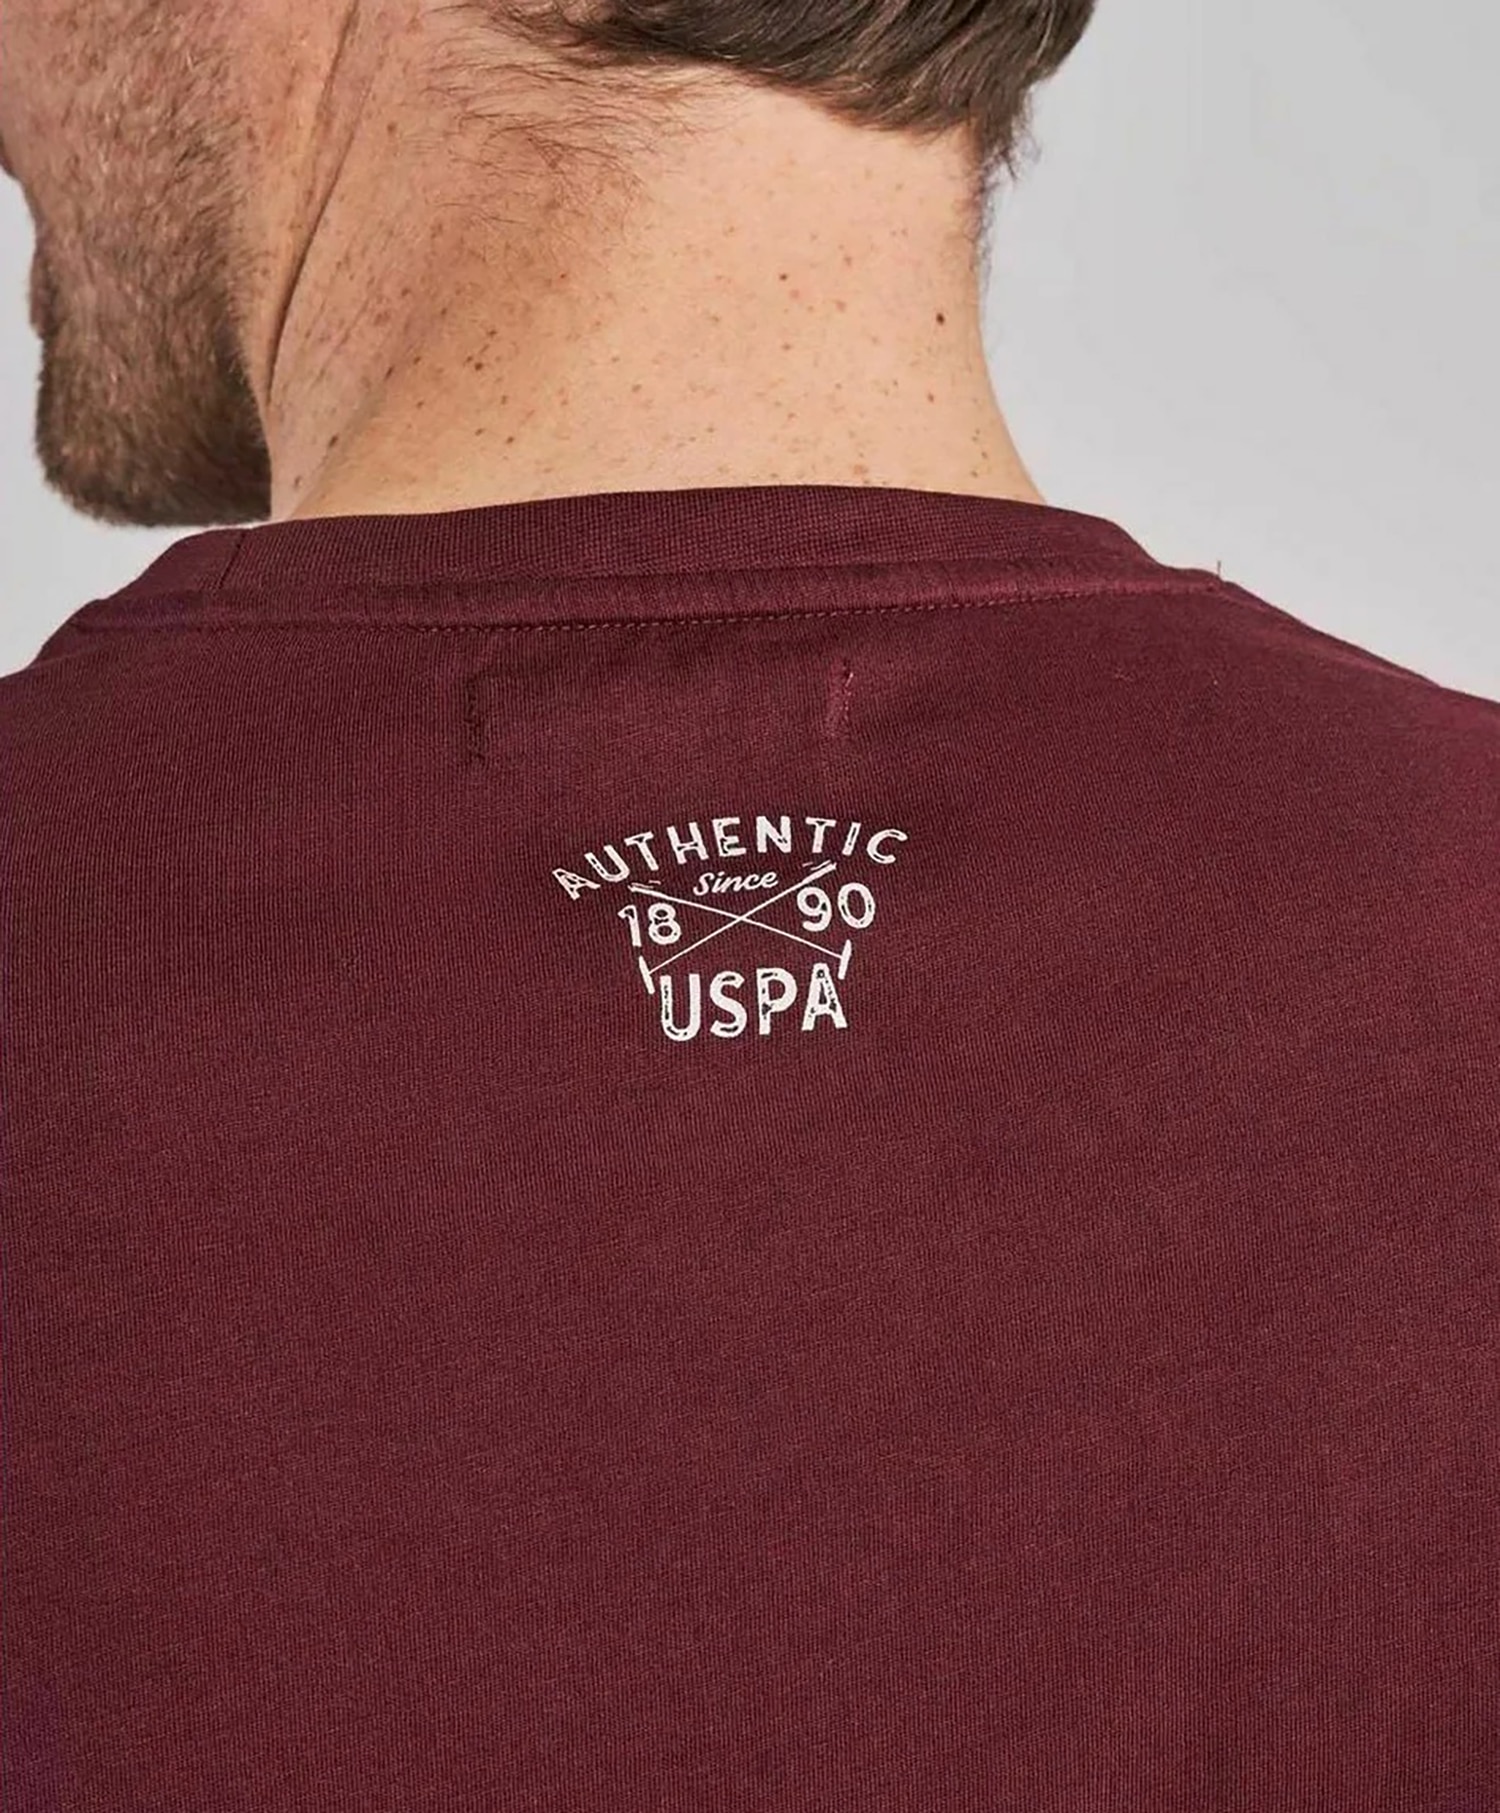 U.S Polo Archibald T-shirt